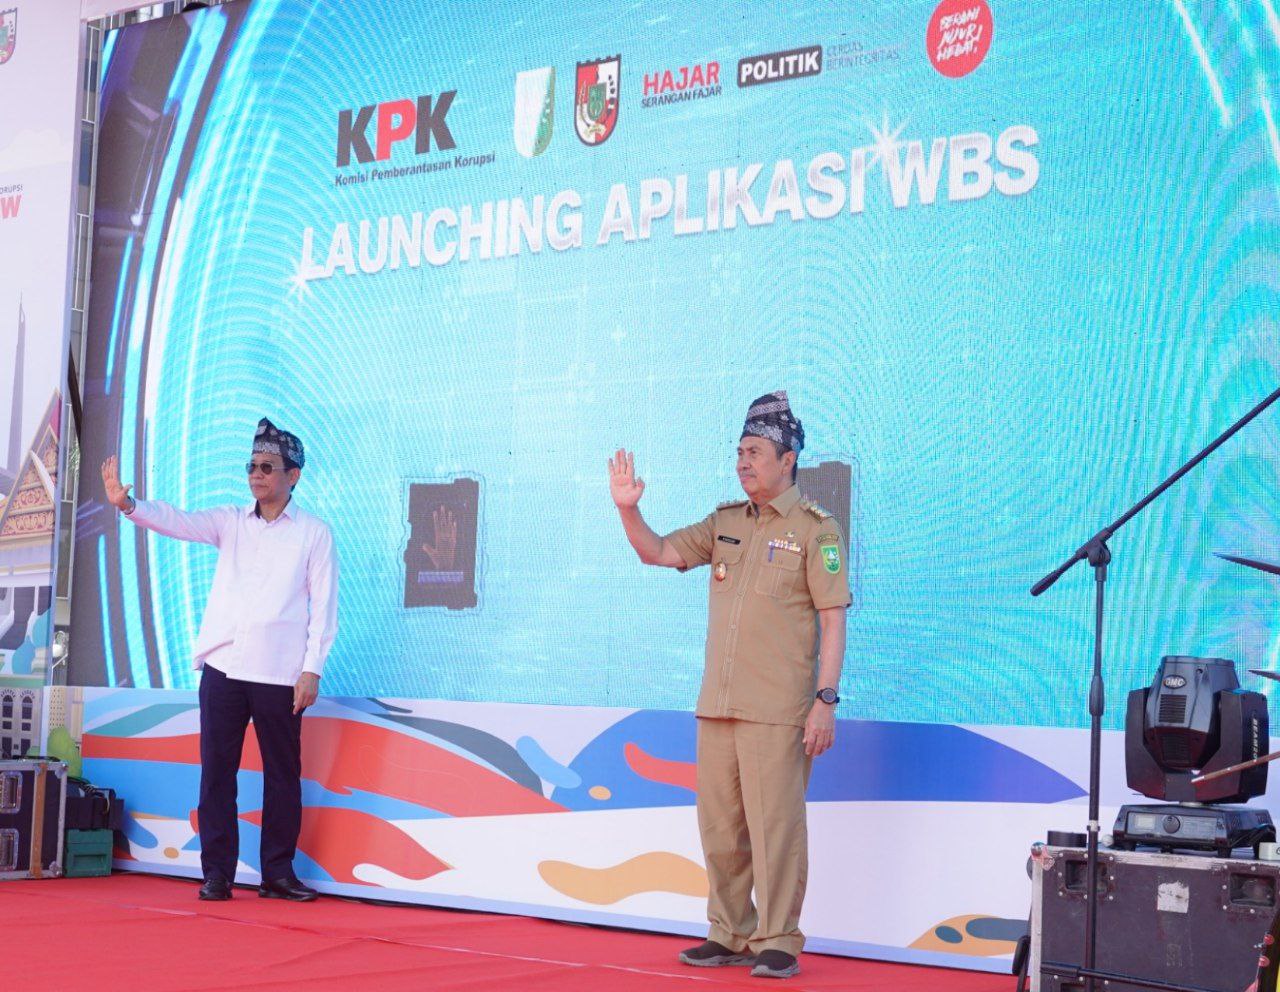 Pemprov Riau Launching Aplikasi WBS Bersama KPK